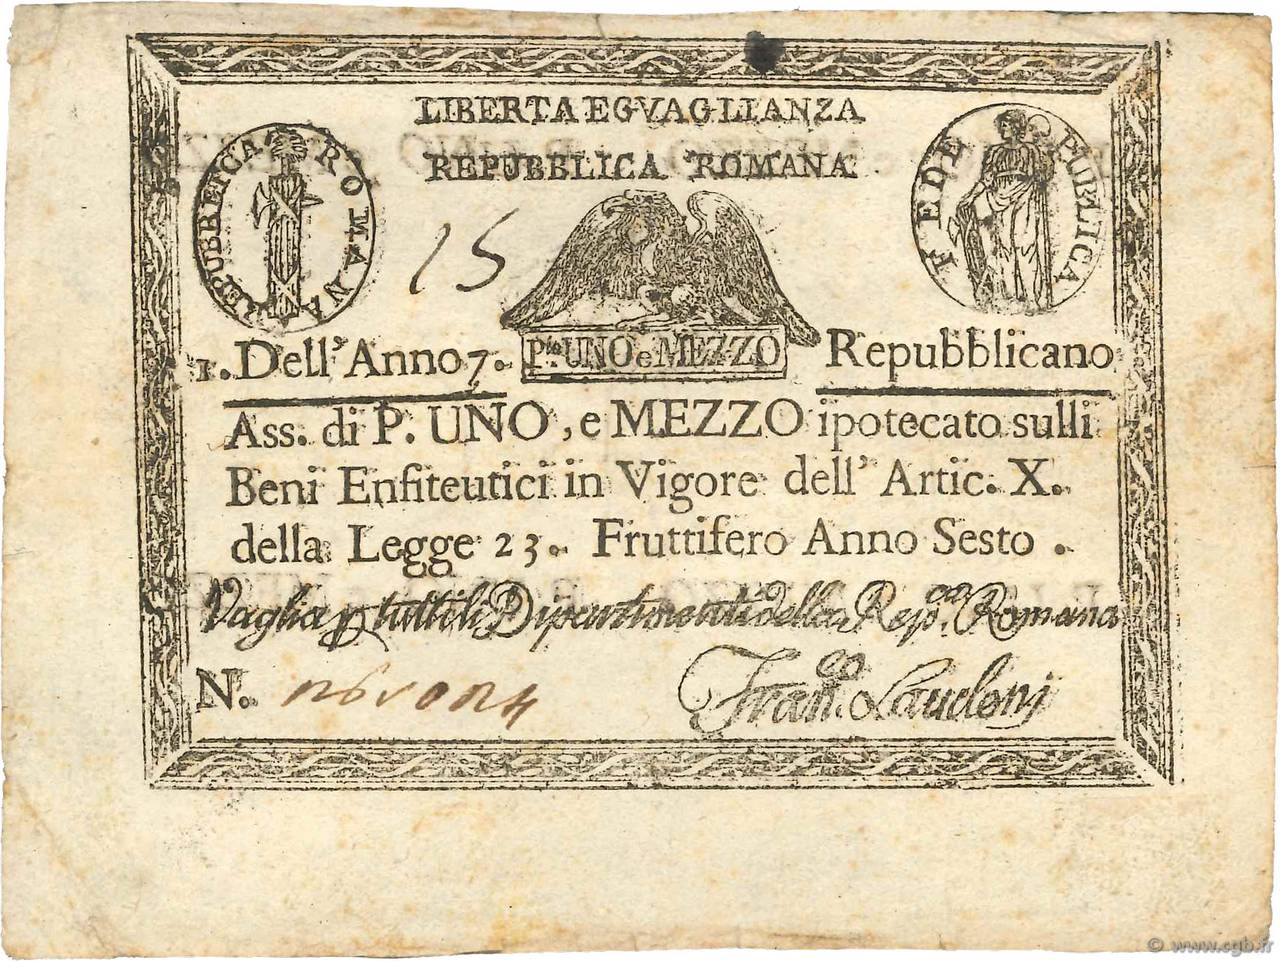 1,5 Paoli ITALIA  1798 PS.534 MBC